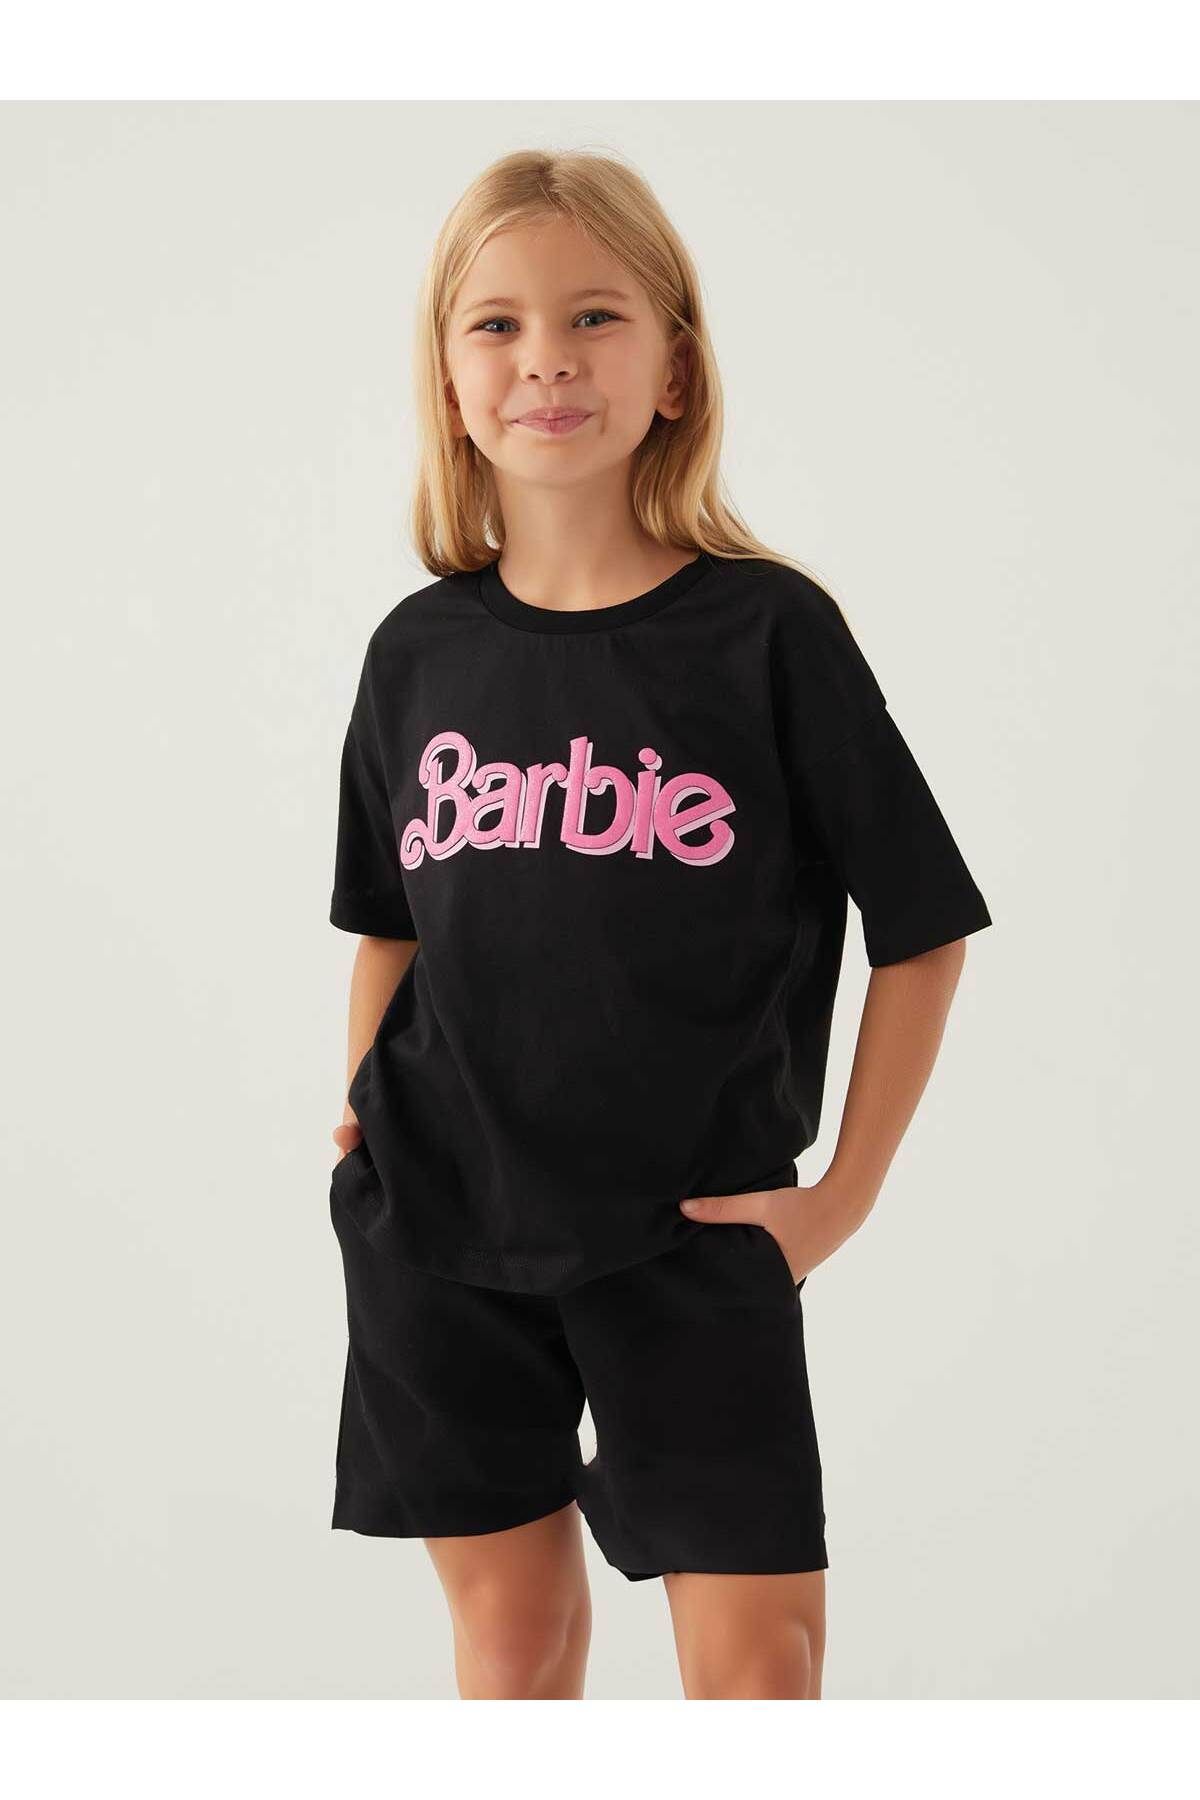 Barbie Kız Çocuk Tişört 3-7 Yaş Siyah 18214772324S1